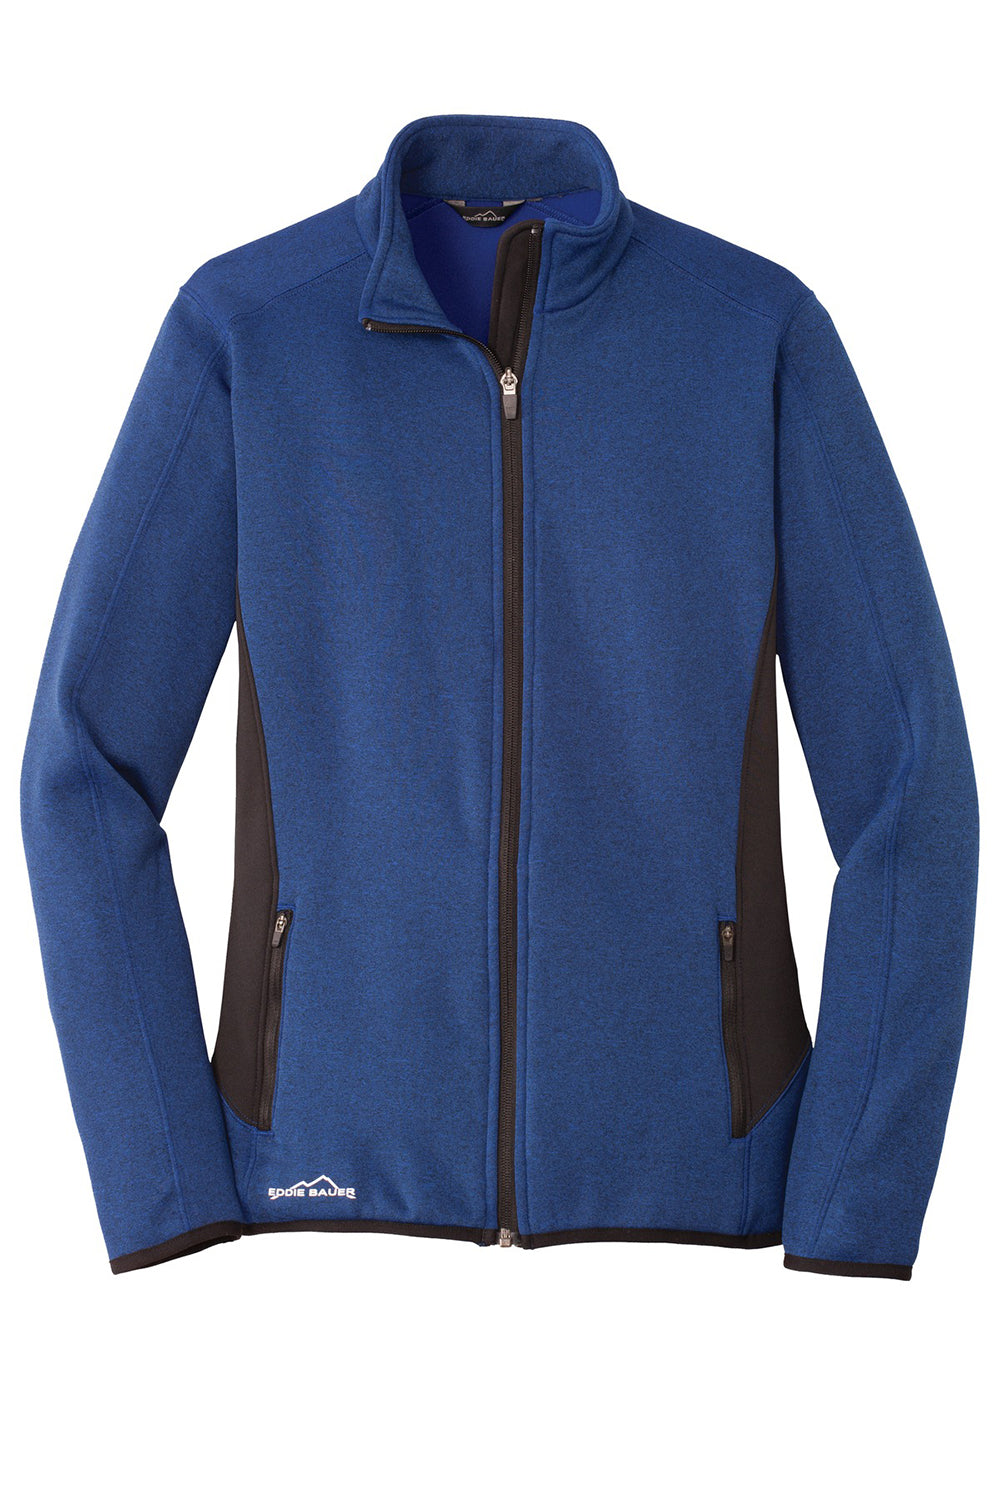 Eddie Bauer EB239 Womens Full Zip Fleece Jacket Heather Blue Flat Front